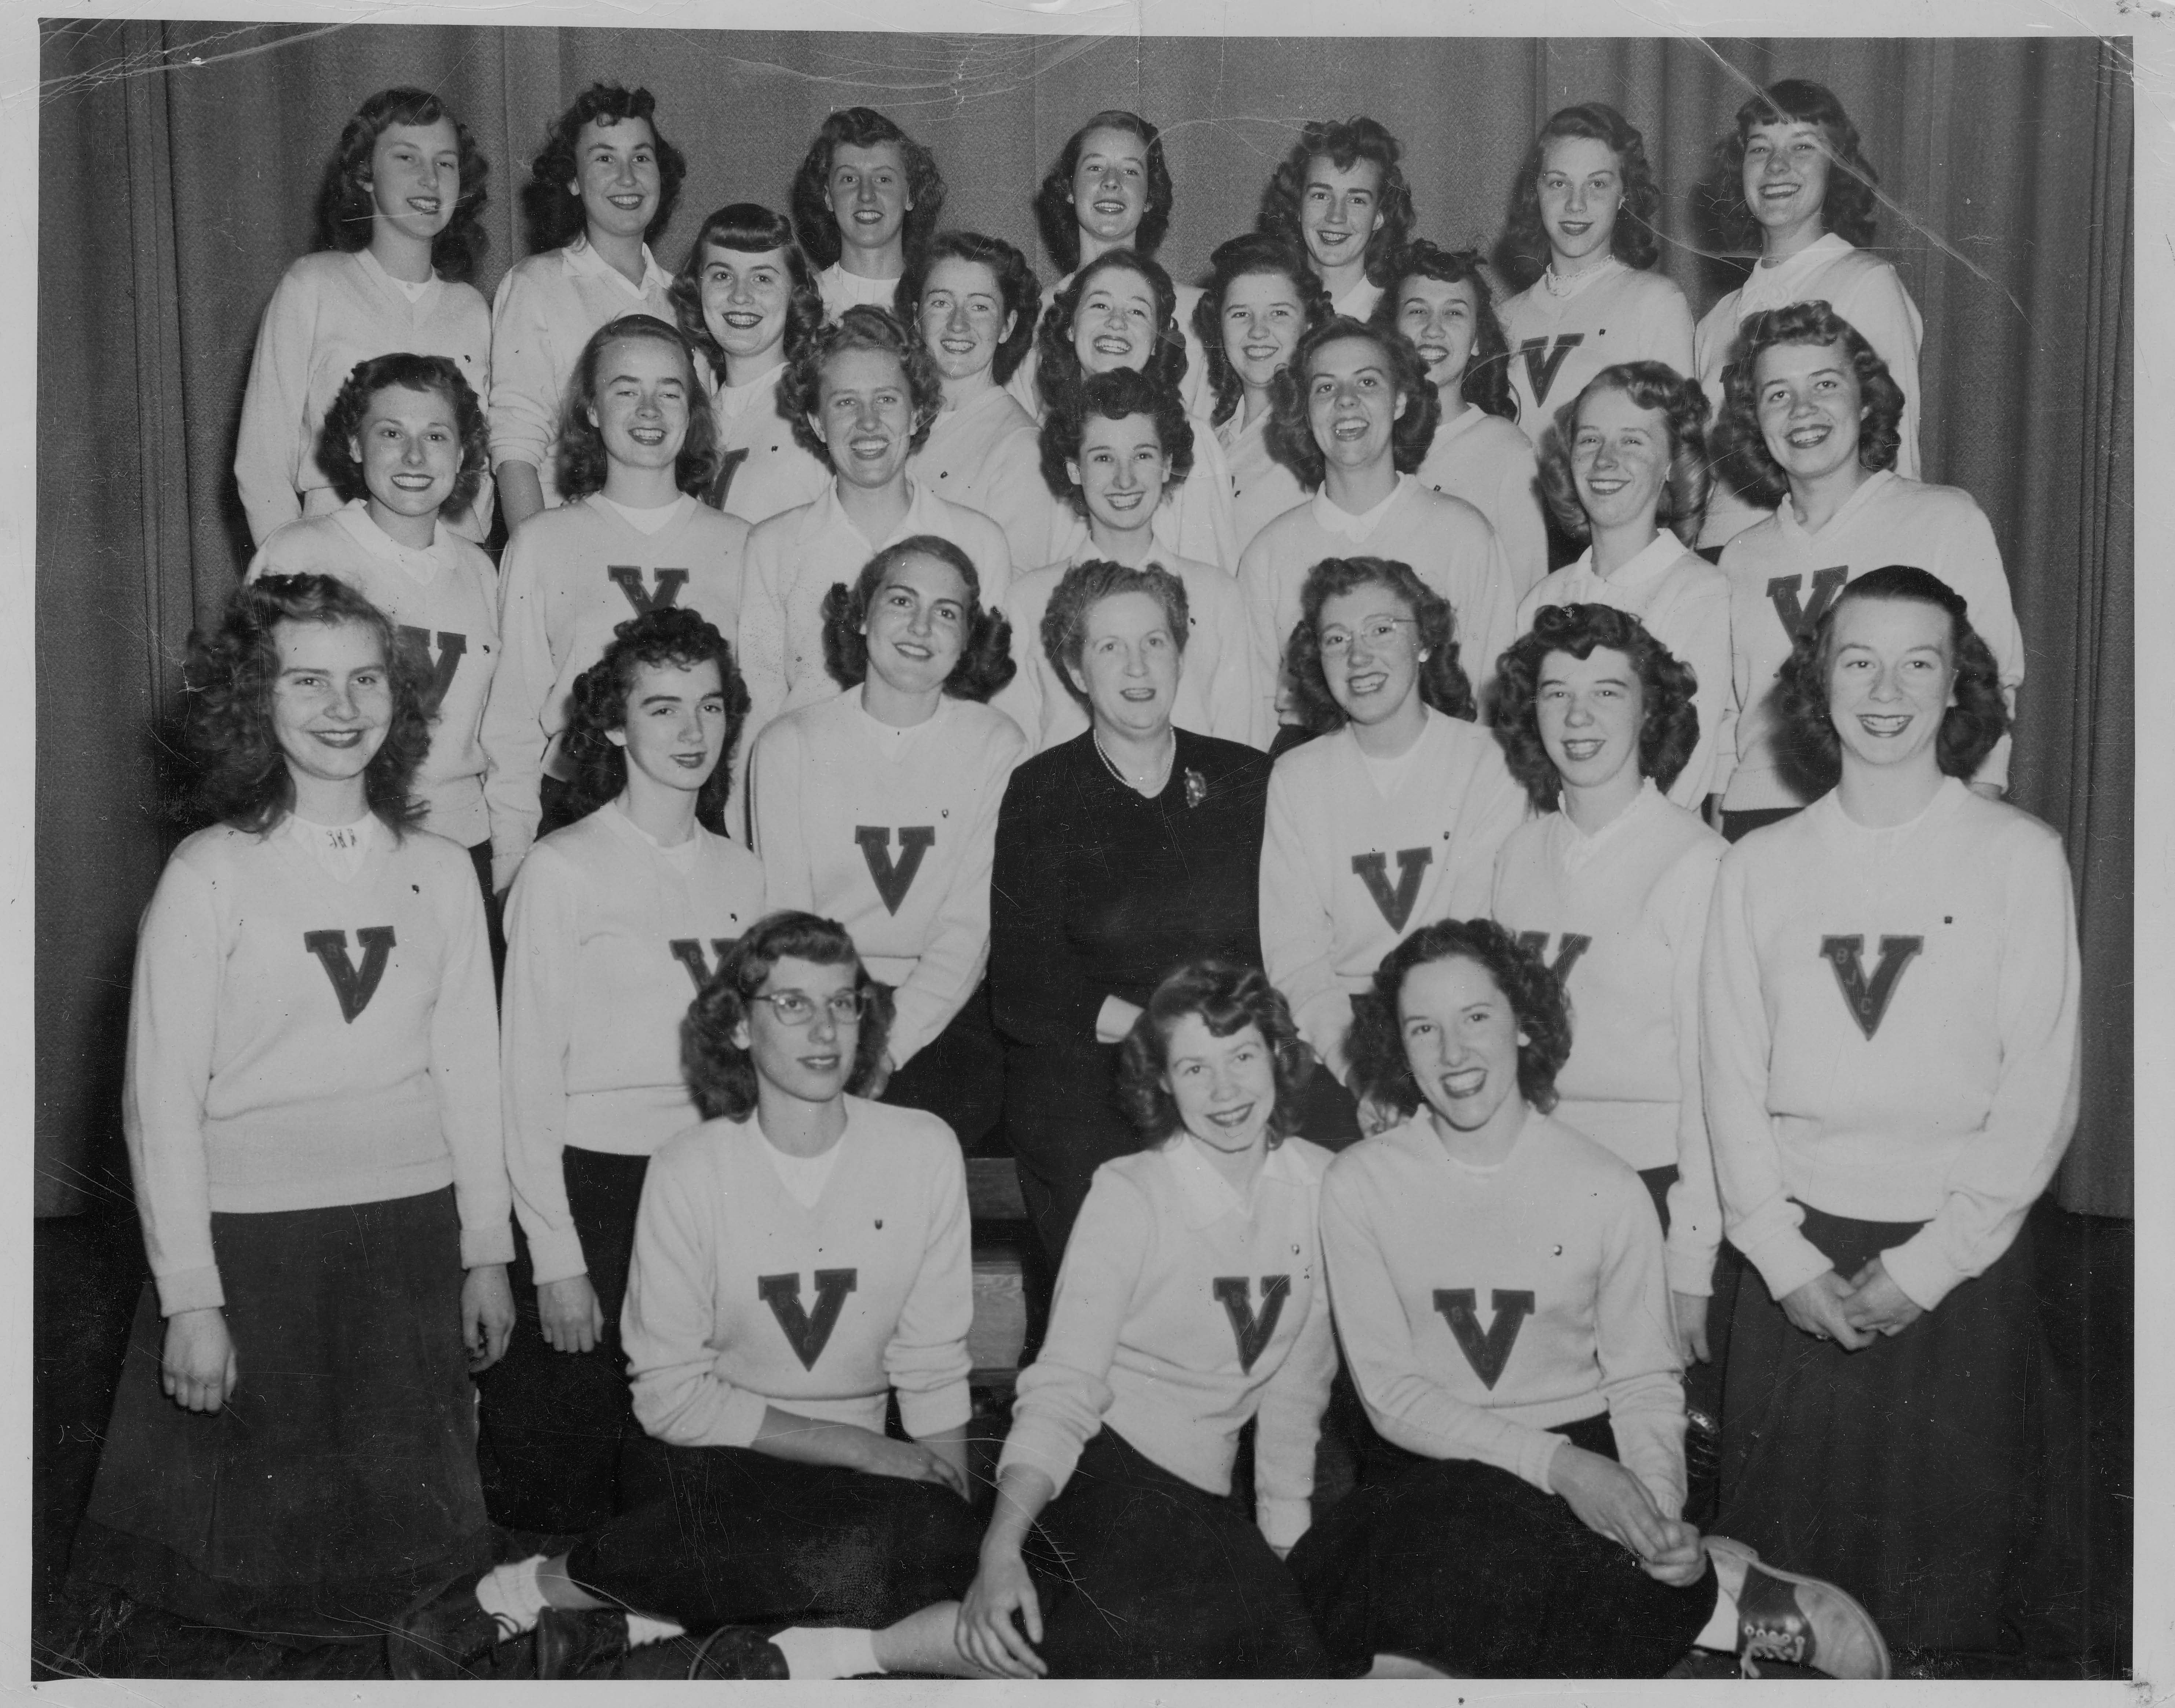 photo of the 1948-1949 Valkyries girls student organization